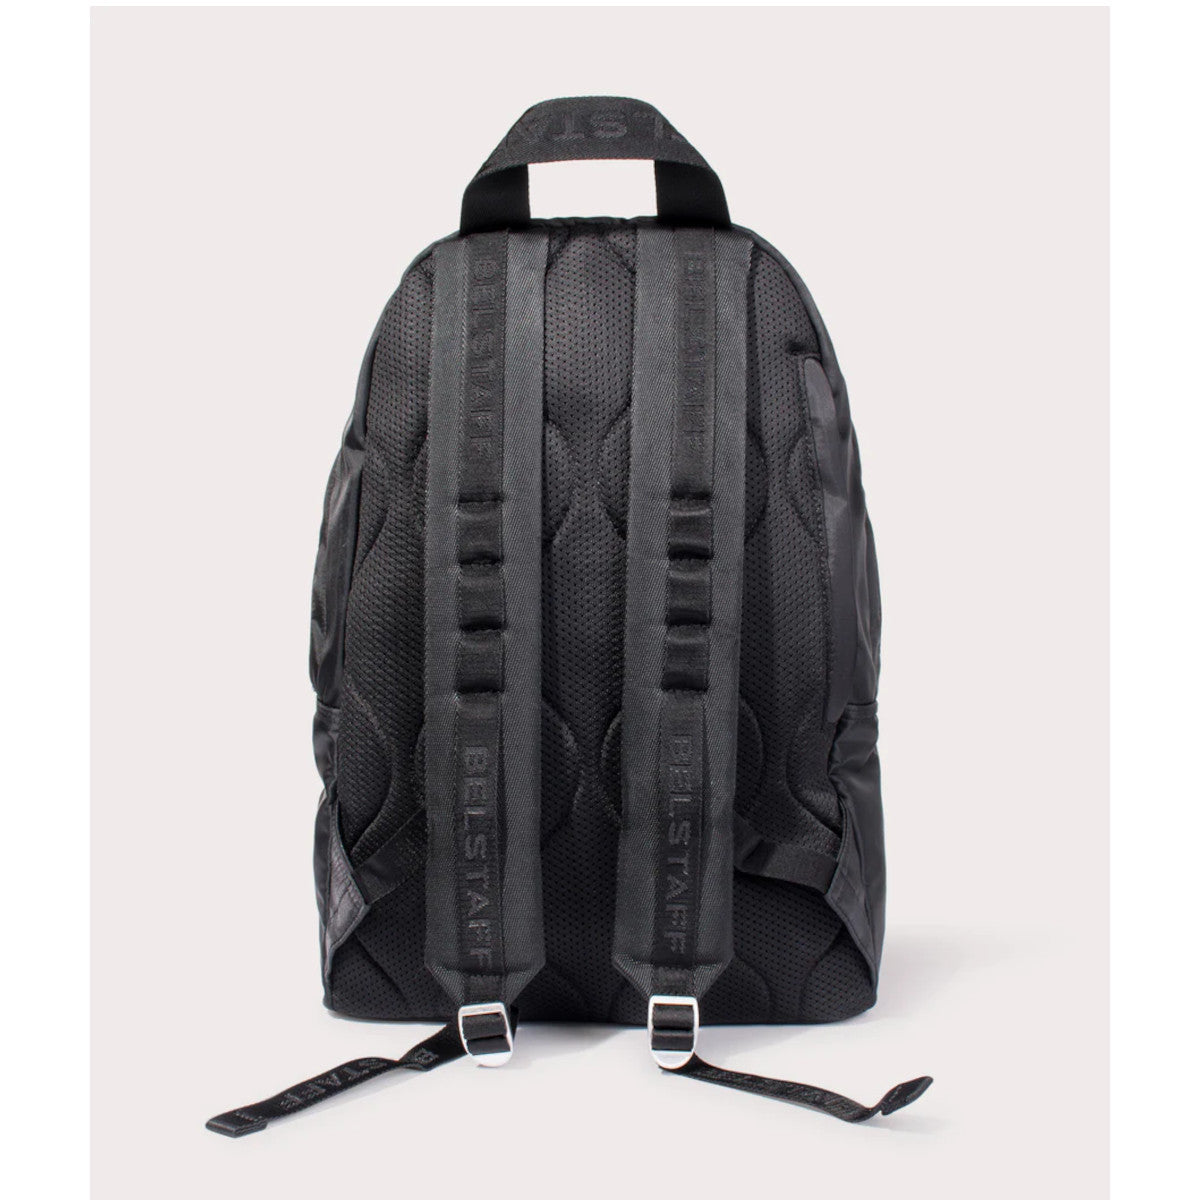 Belstaff Urban Backpack Black